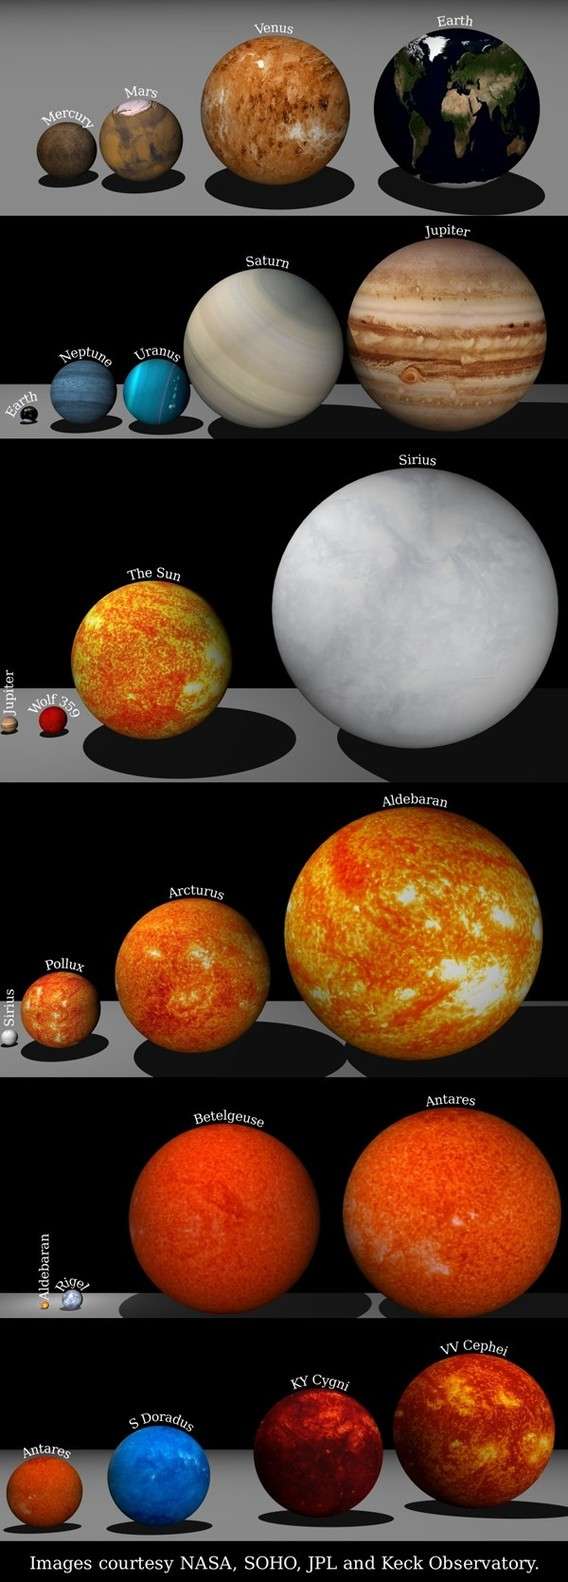 Earth Sun Betelgeuse vv Cephei comparison